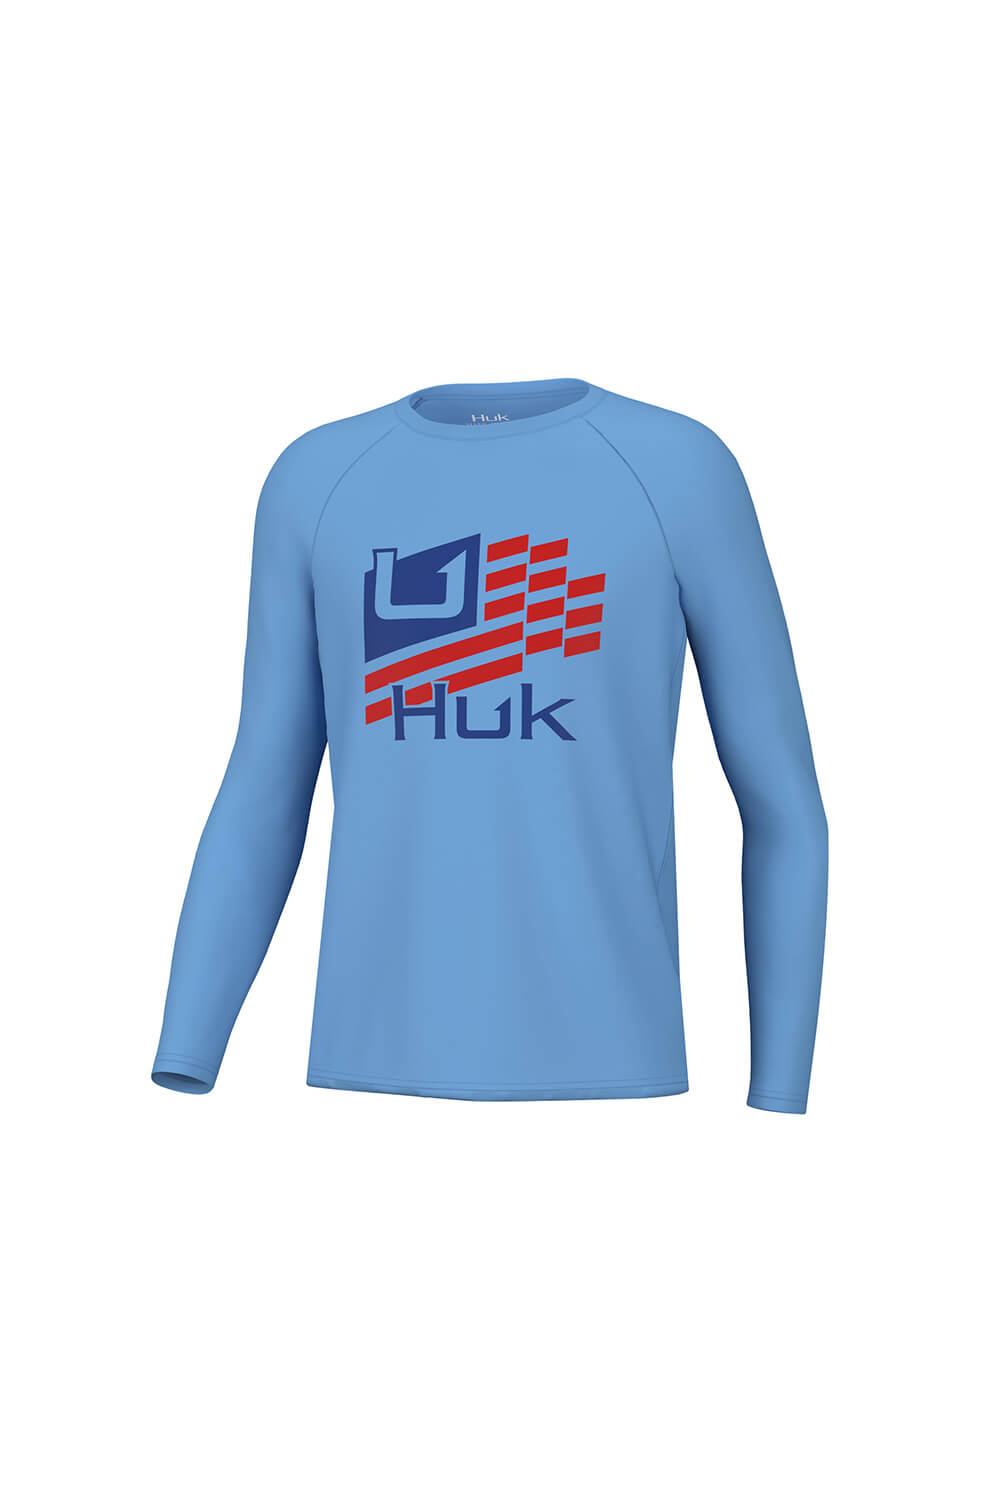 Huk Boys' Pursuit Pattern Long Sleeve, Fishing Shirt for Kids